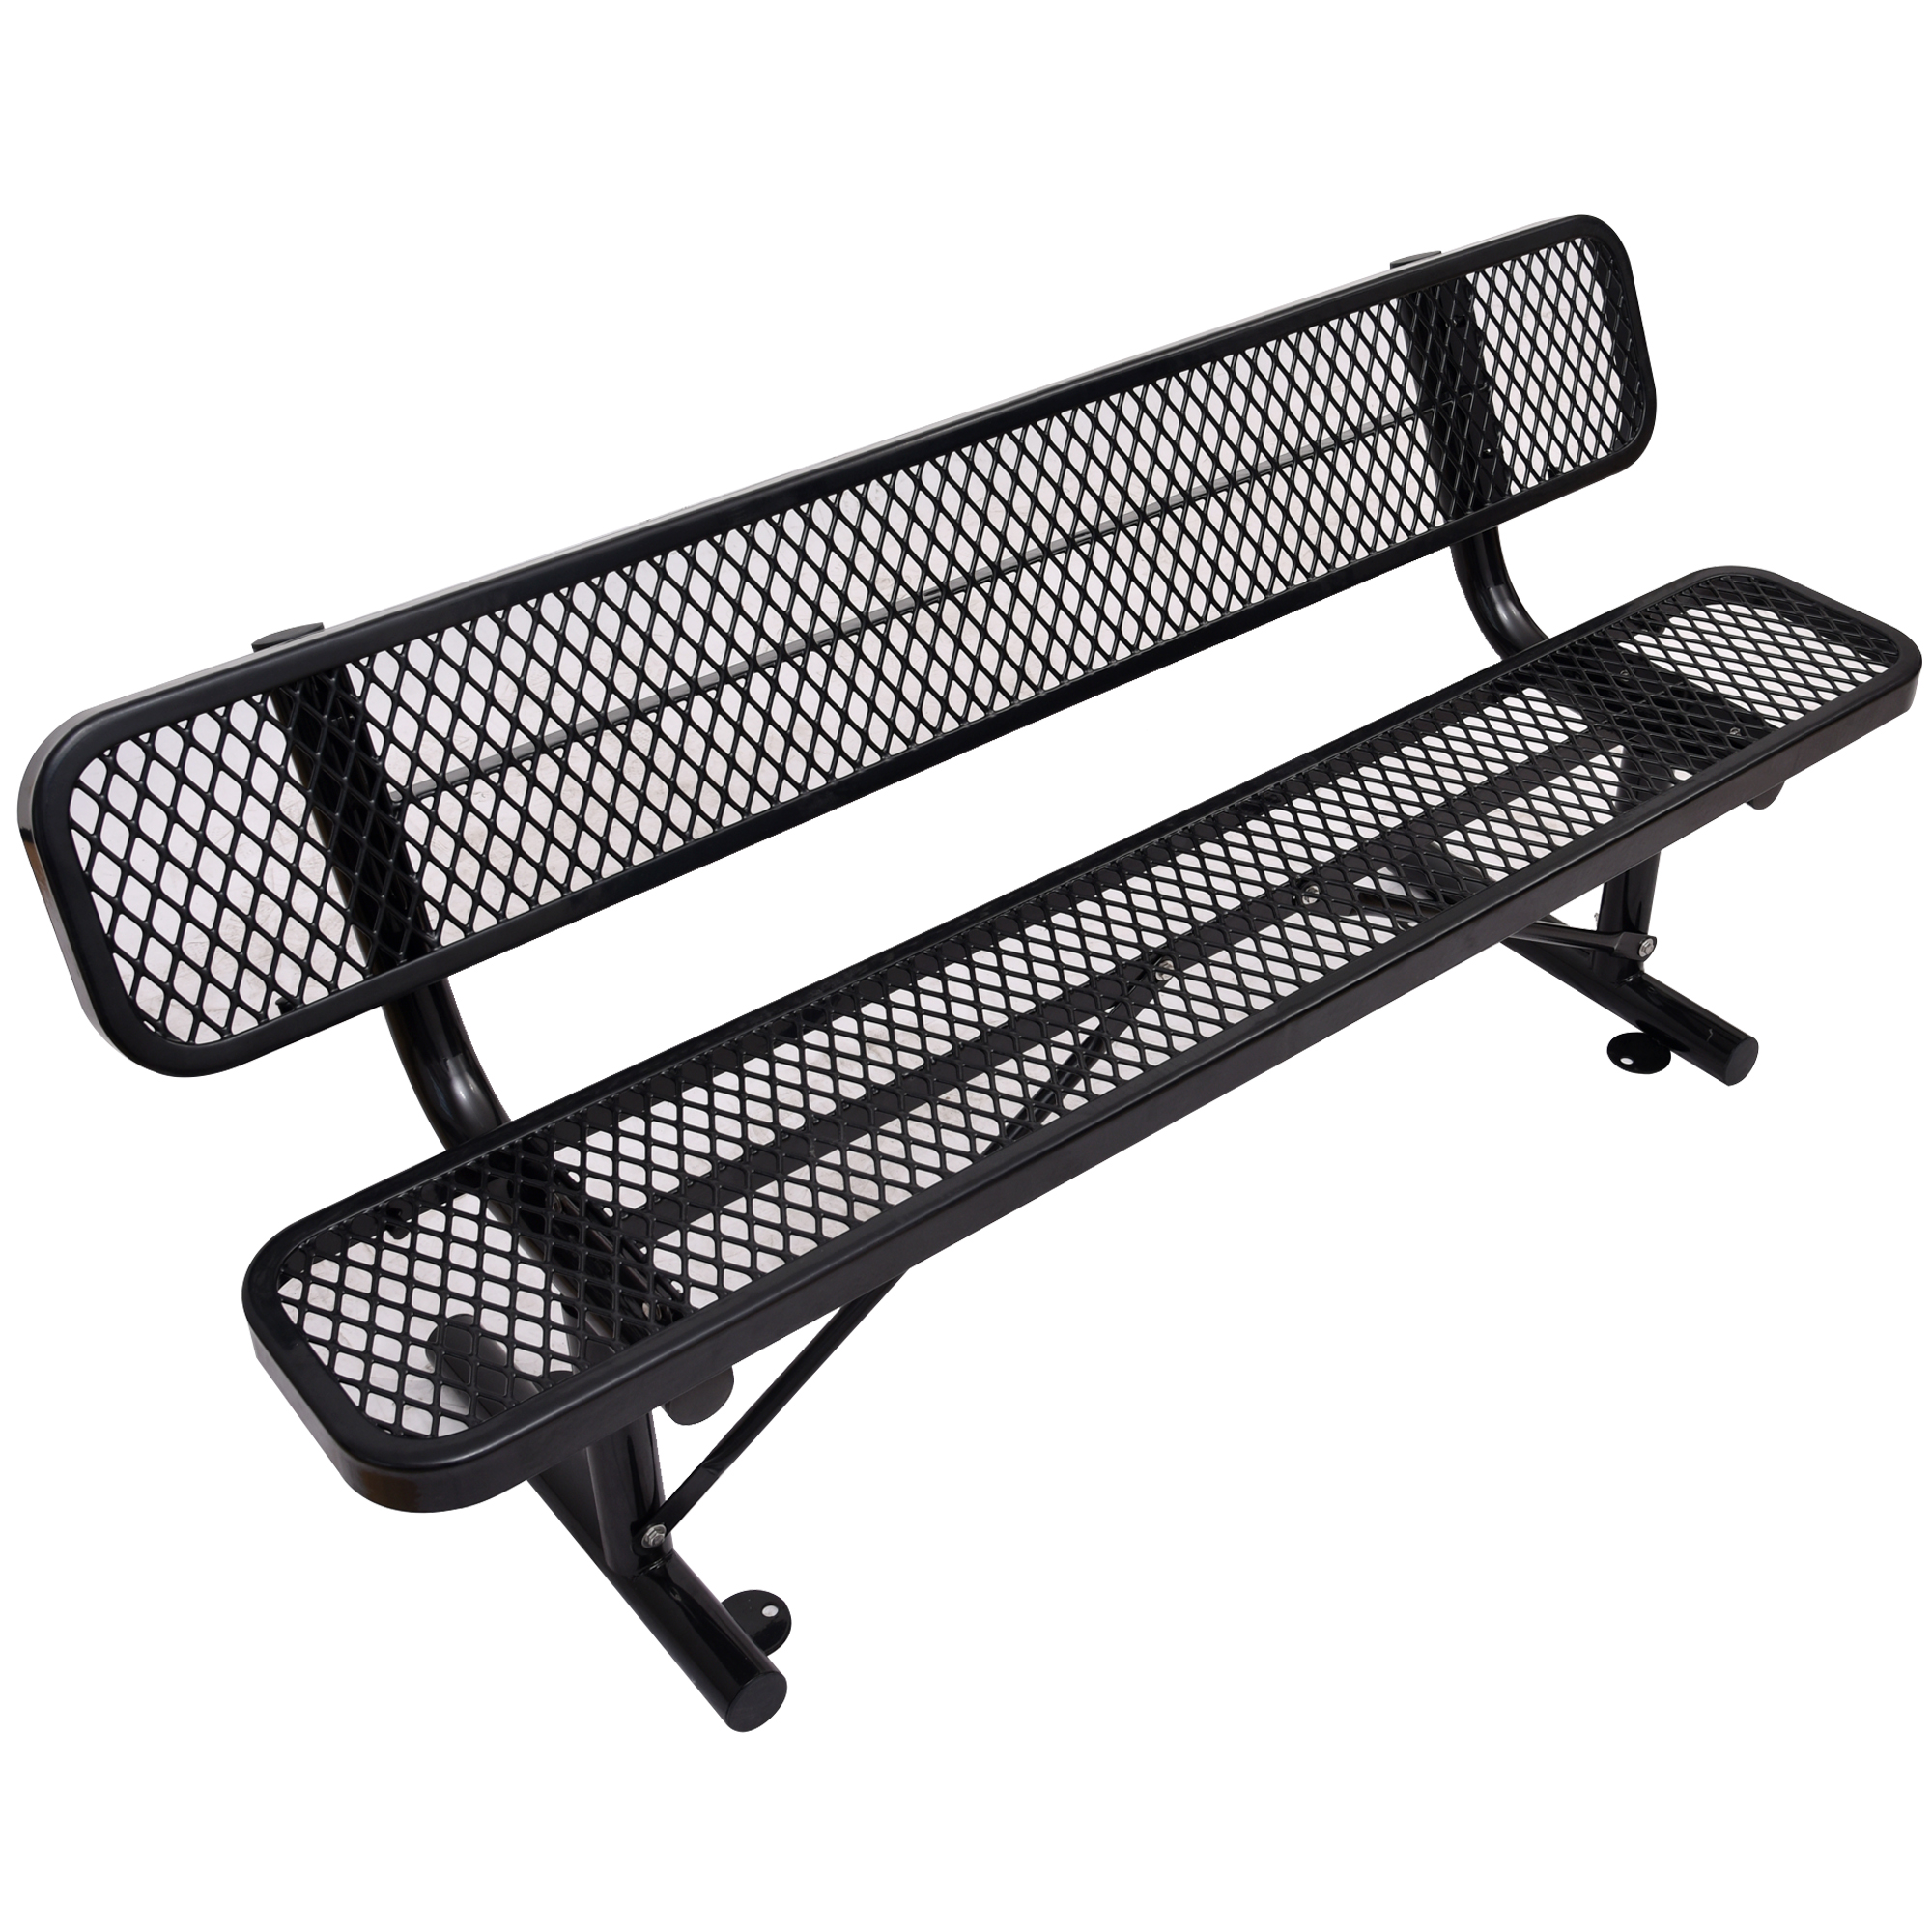 6 ft. Outdoor Steel Bench with Backrest BLACK-Boyel Living